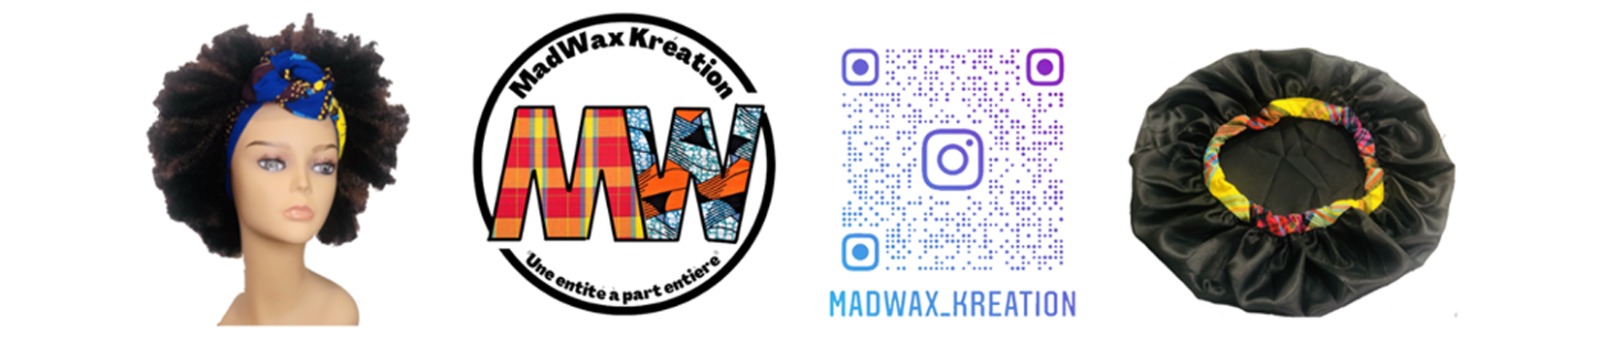 Madwax_kreation